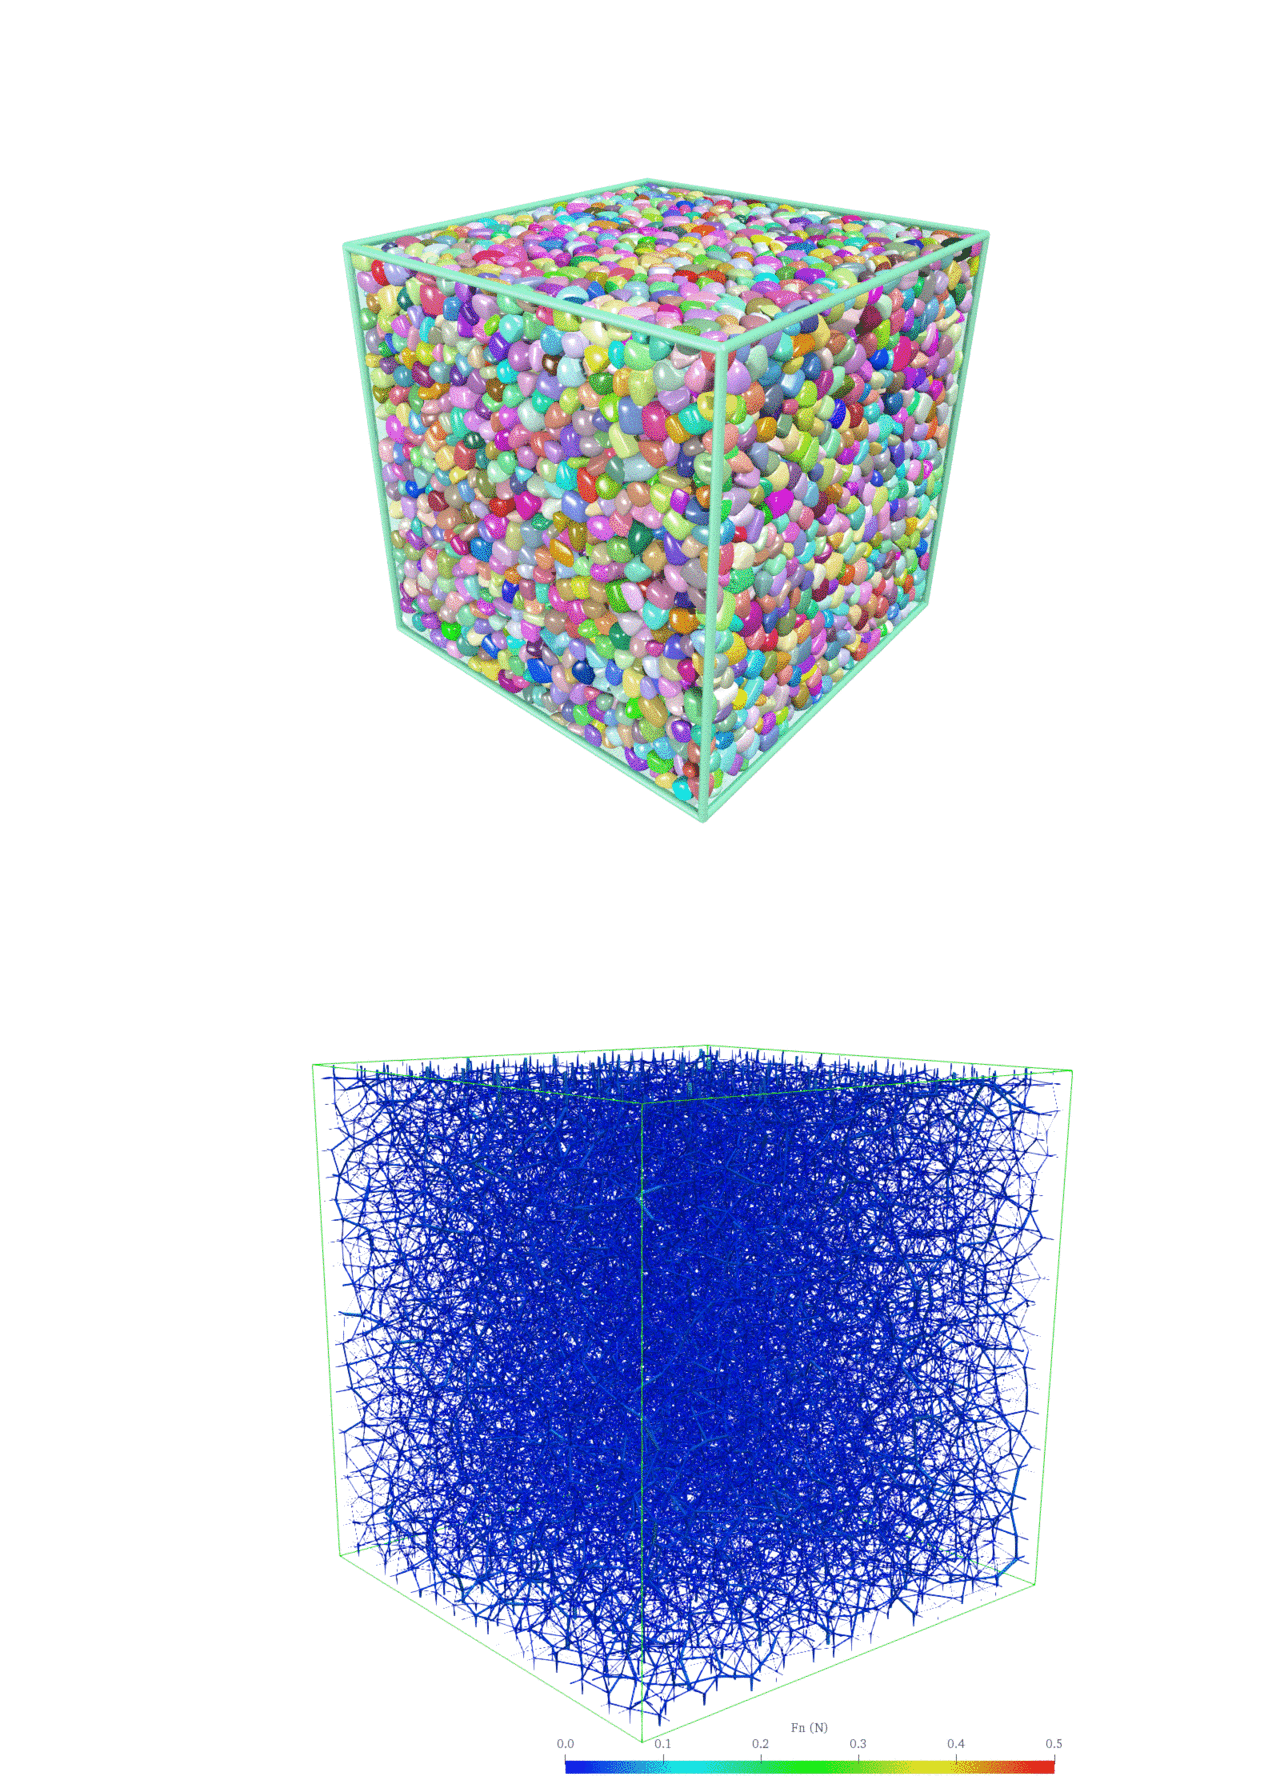 Triaxial compression of superellipsoidal DEM